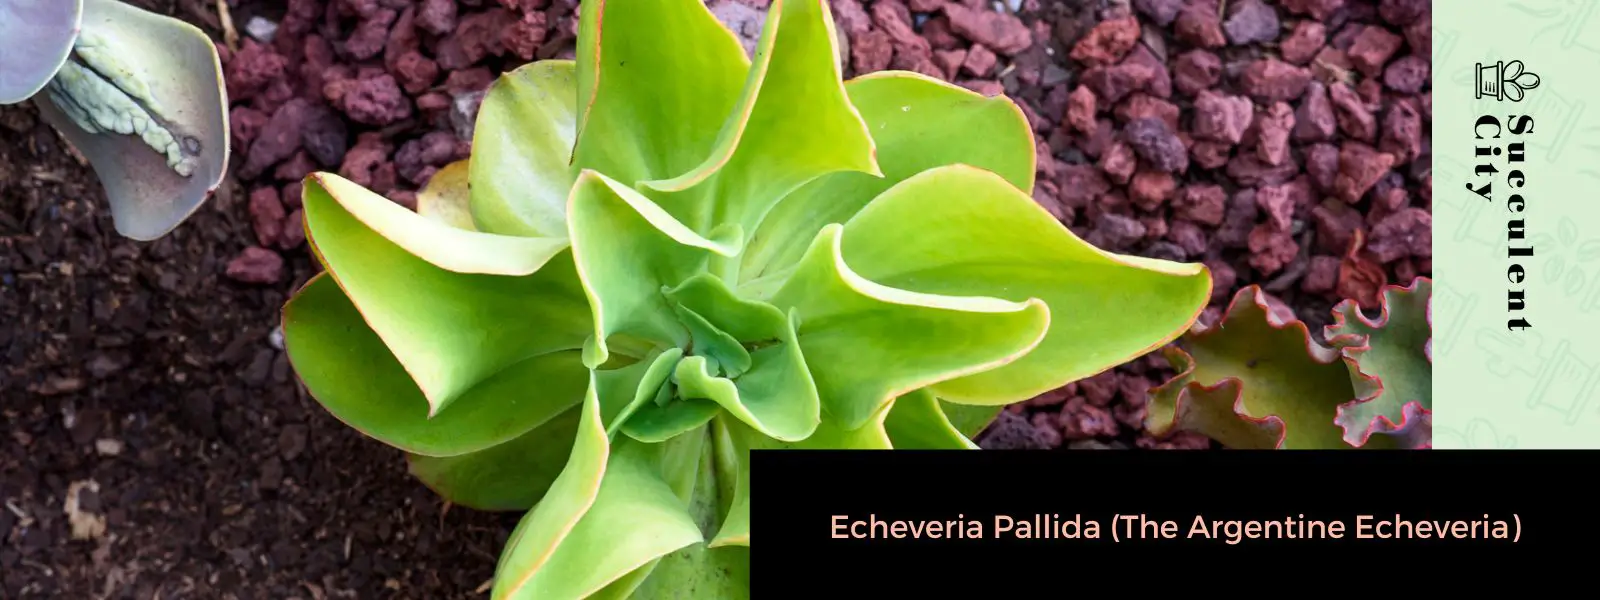 Echeveria Pallida (La Echeveria Argentina)